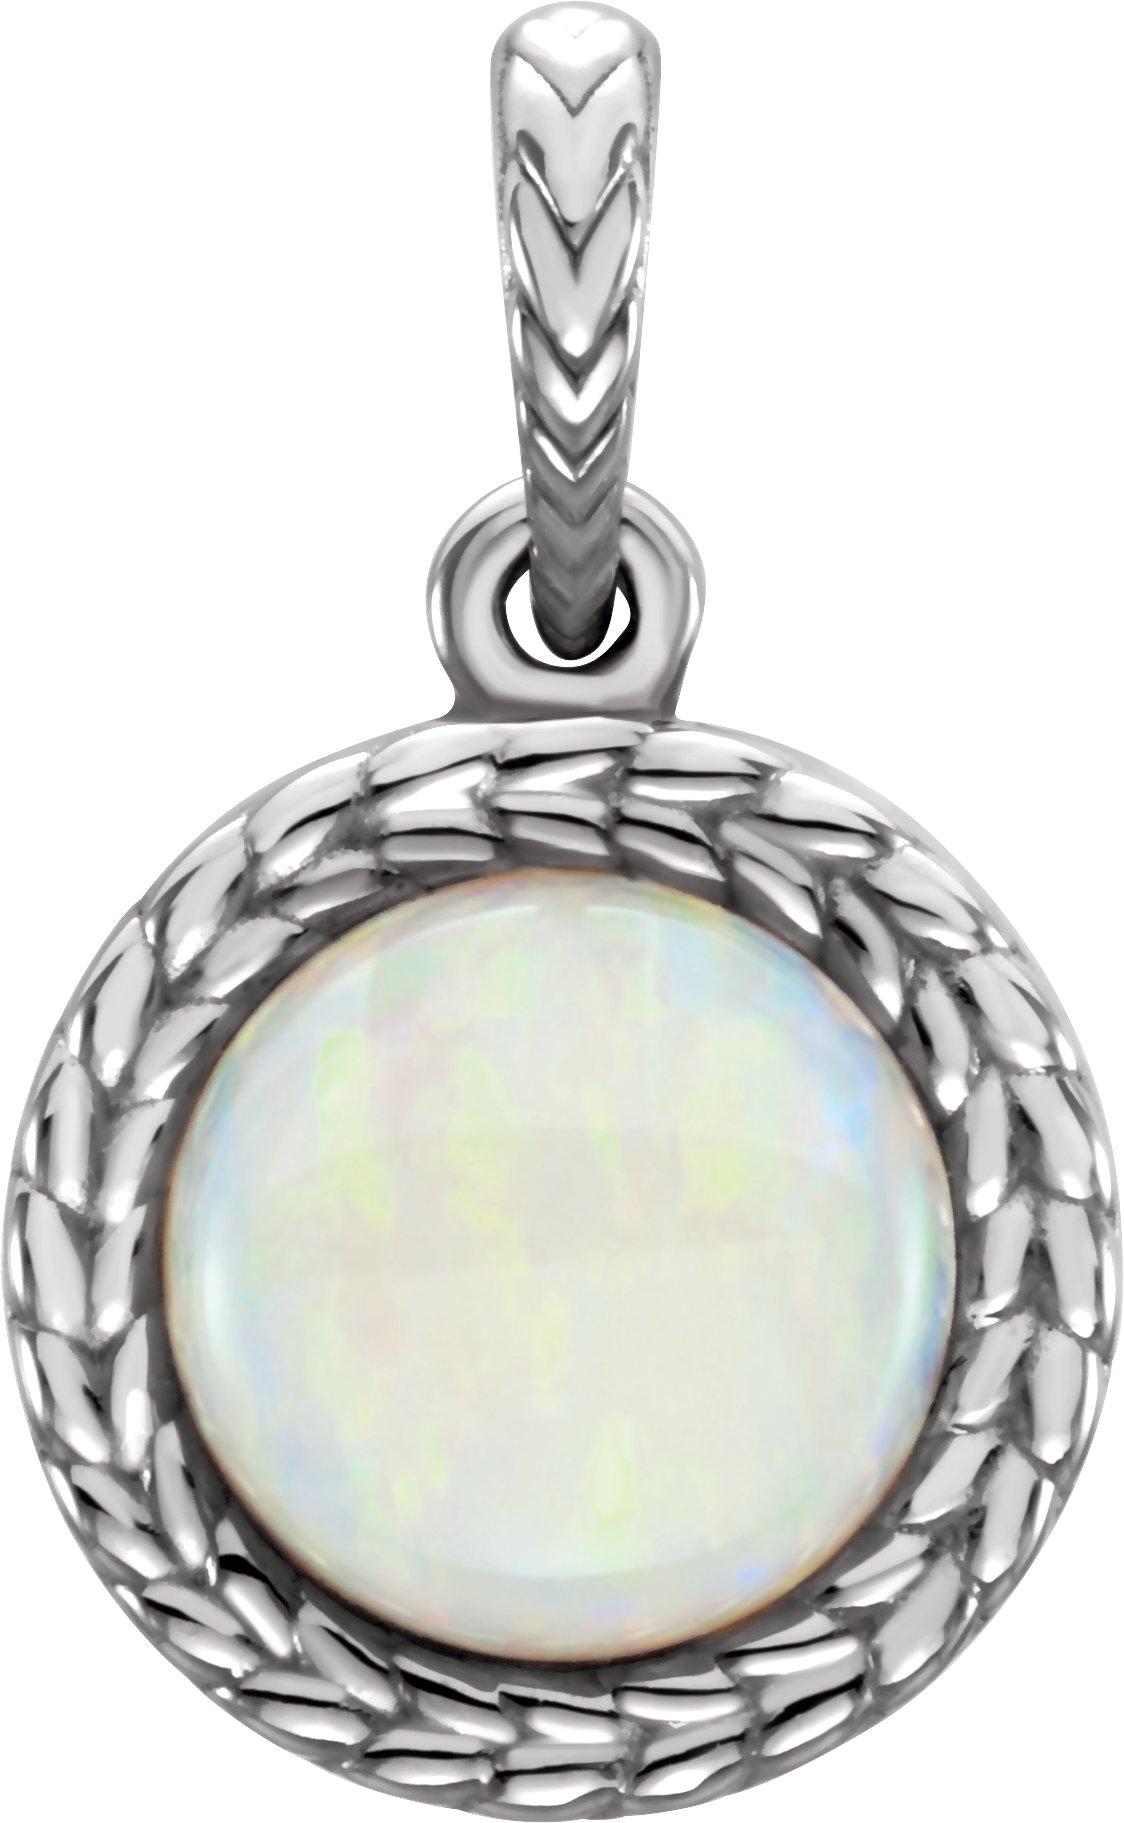 Opal Leaf Design Pendant or Mounting